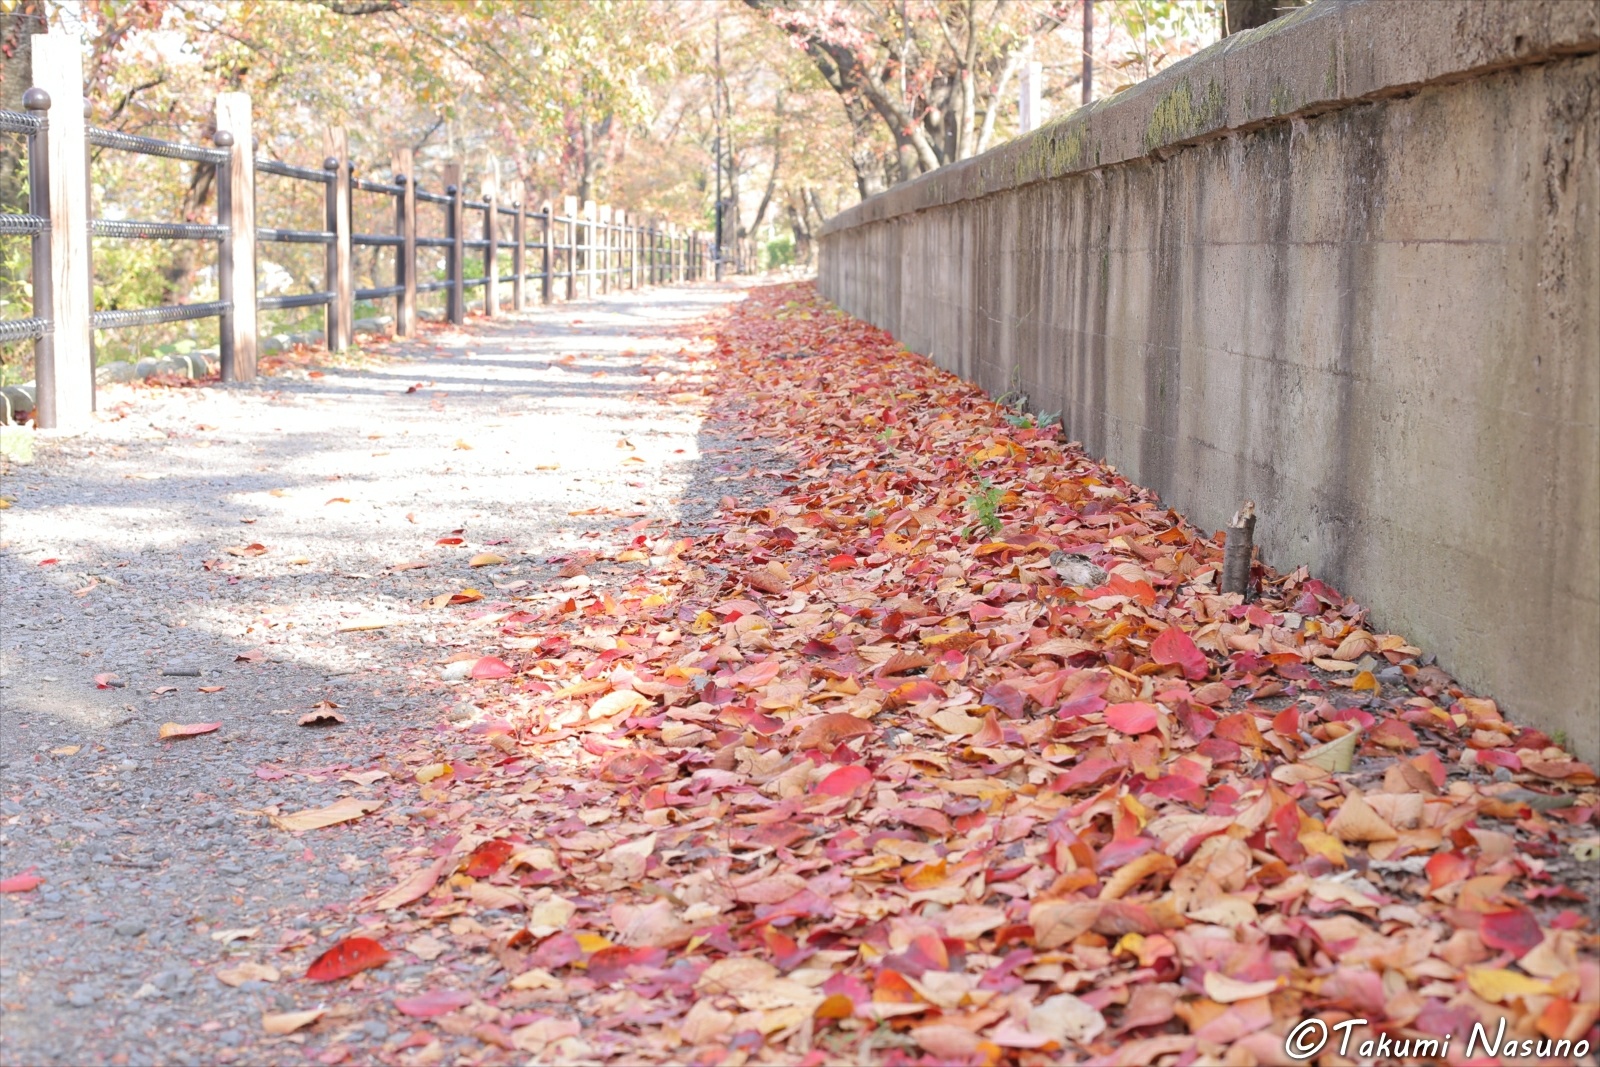 Fallen Leaves at Katsunuma of Yamanashi